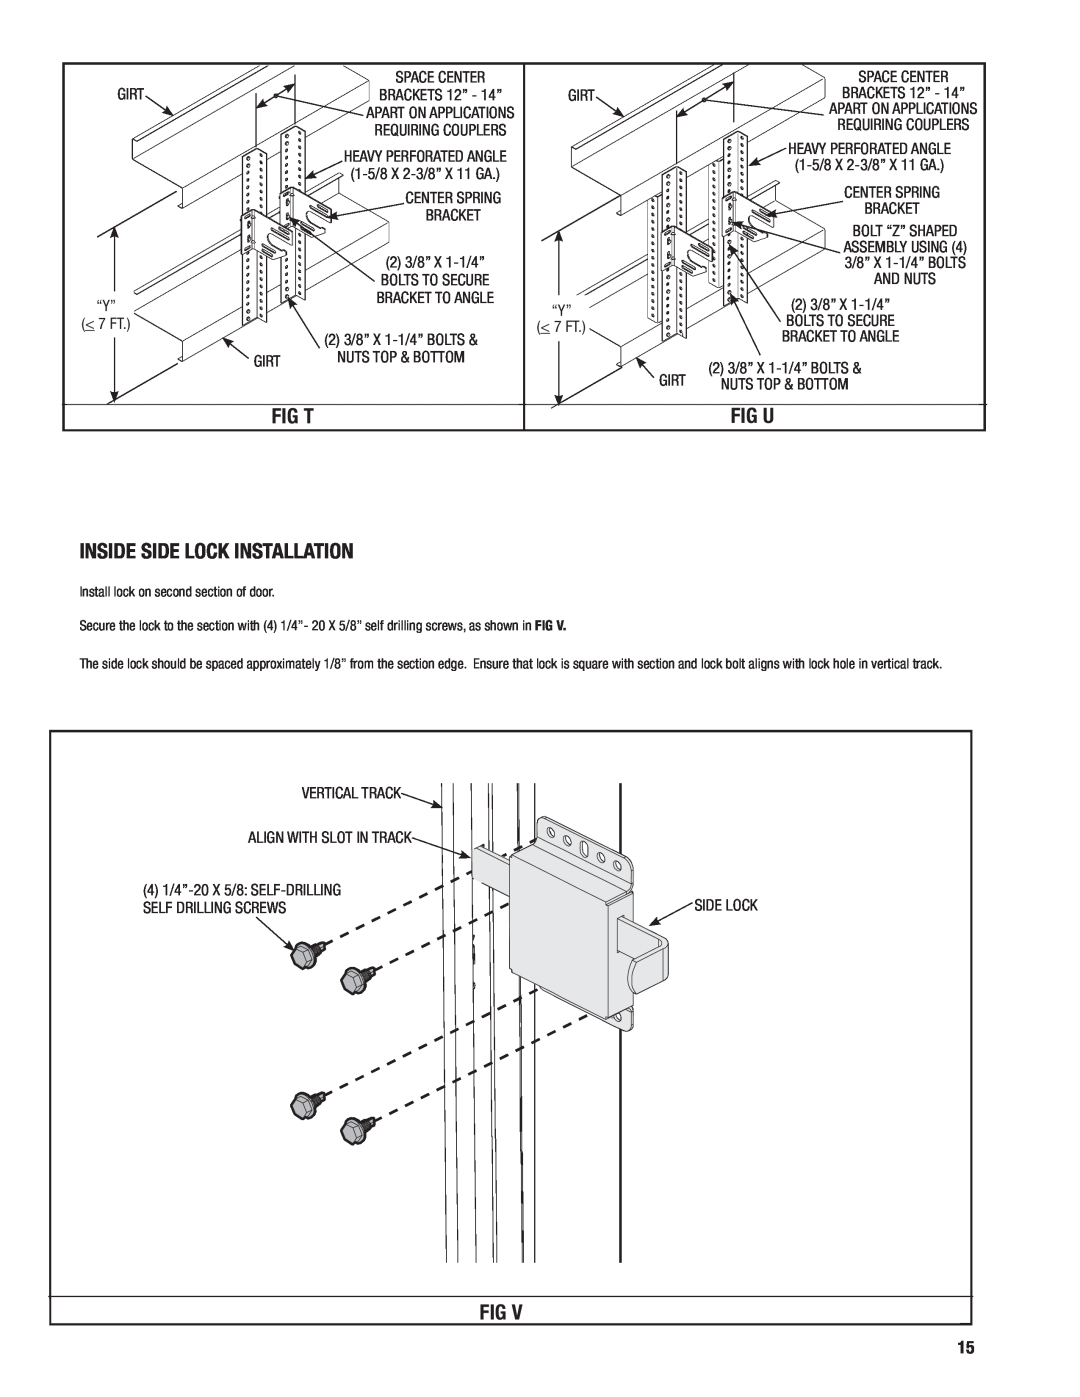 Wayne-Dalton 452, 451 installation instructions Fig T, Fig U, Inside Side Lock Installation 